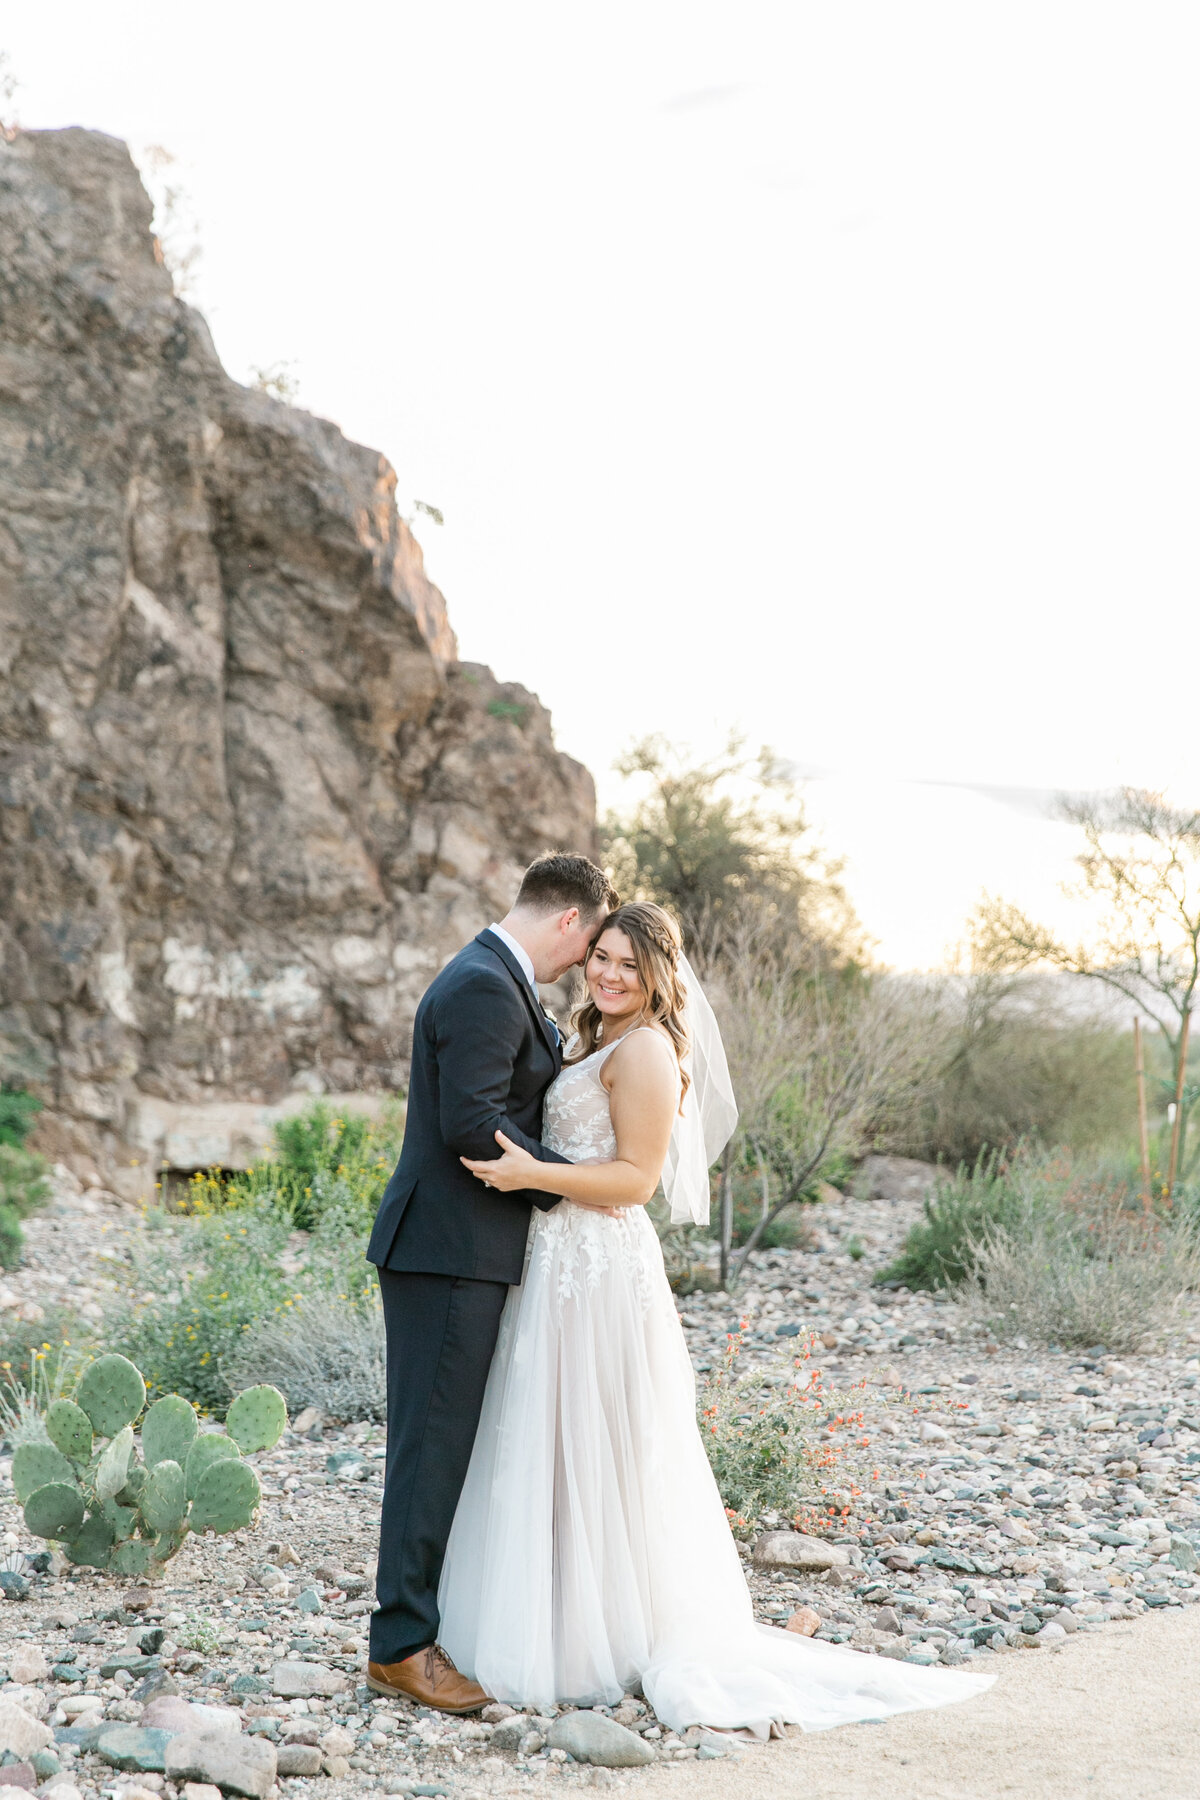 Karlie Colleen Photography - Arizona Backyard wedding - Brittney & Josh-233